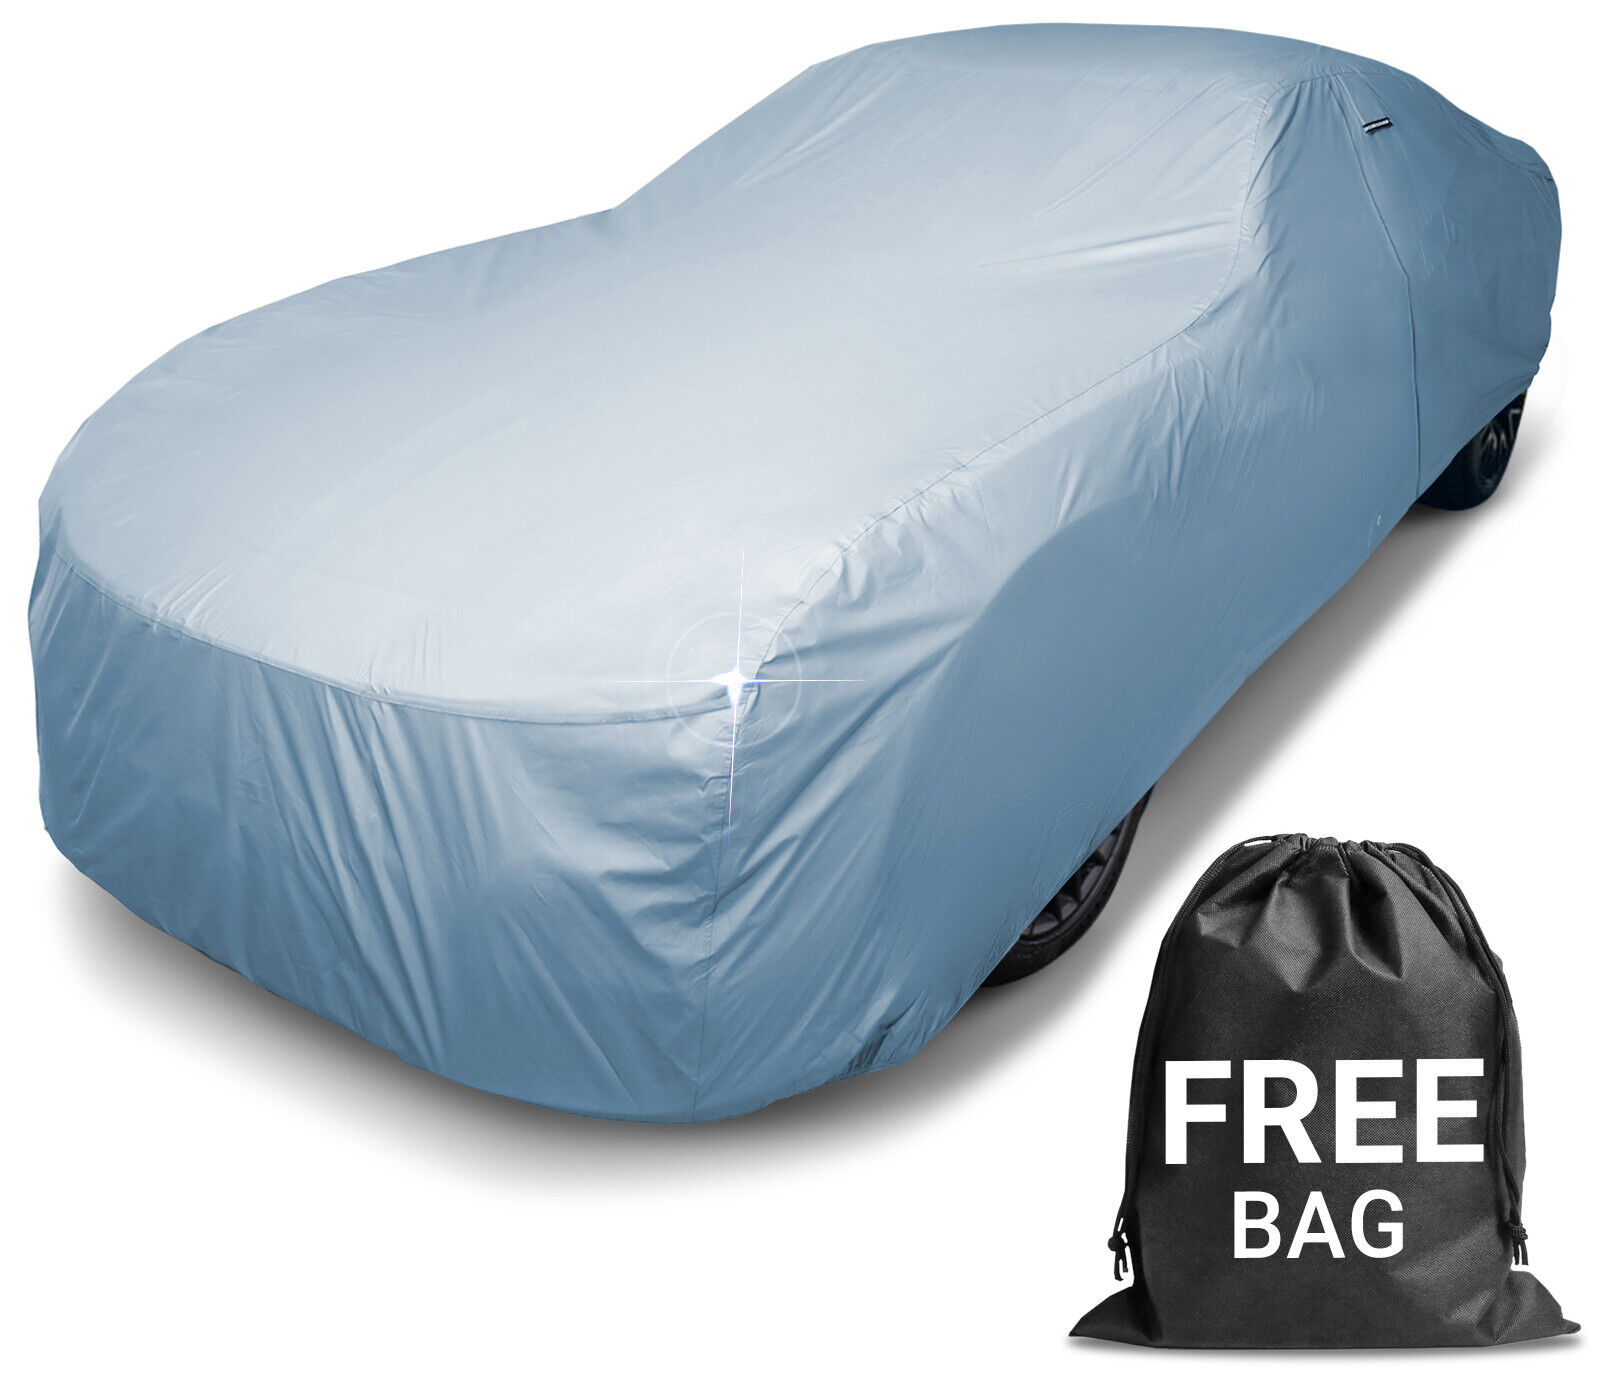 For FORD [CUSTOM] Premium Custom-Fit Outdoor Waterproof Car Cover Indoor Outdoor